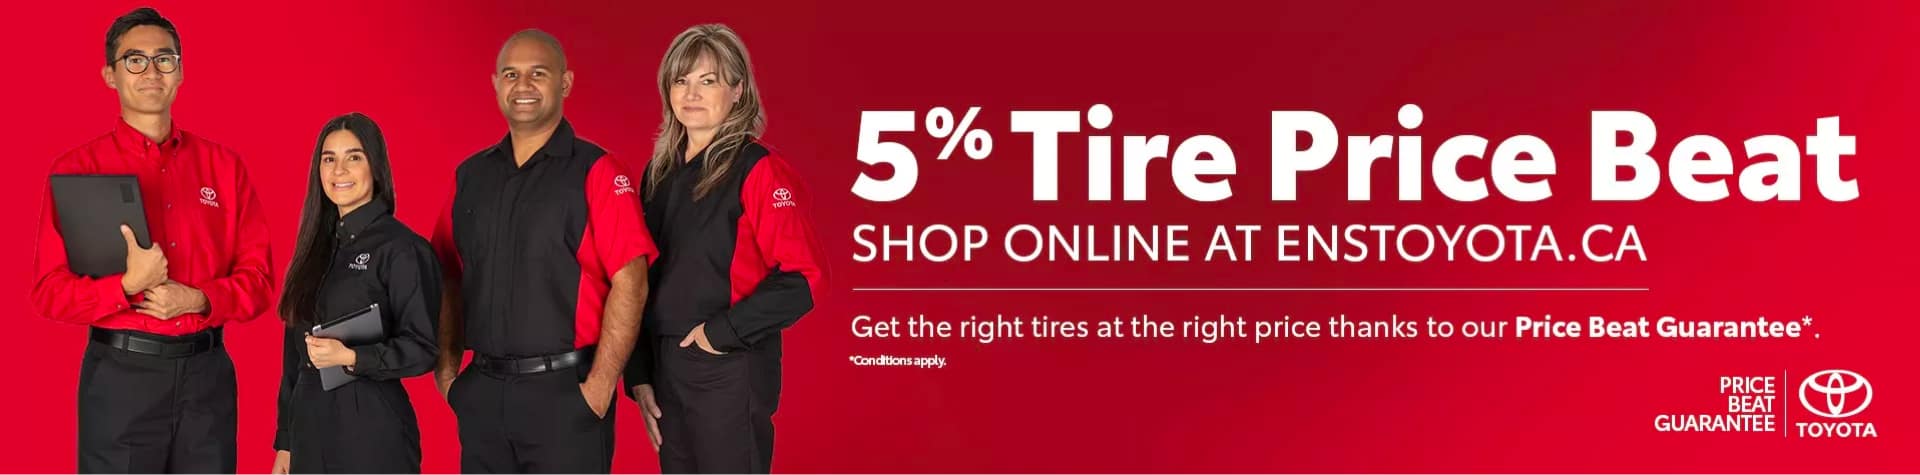 5% Tire Price Beat